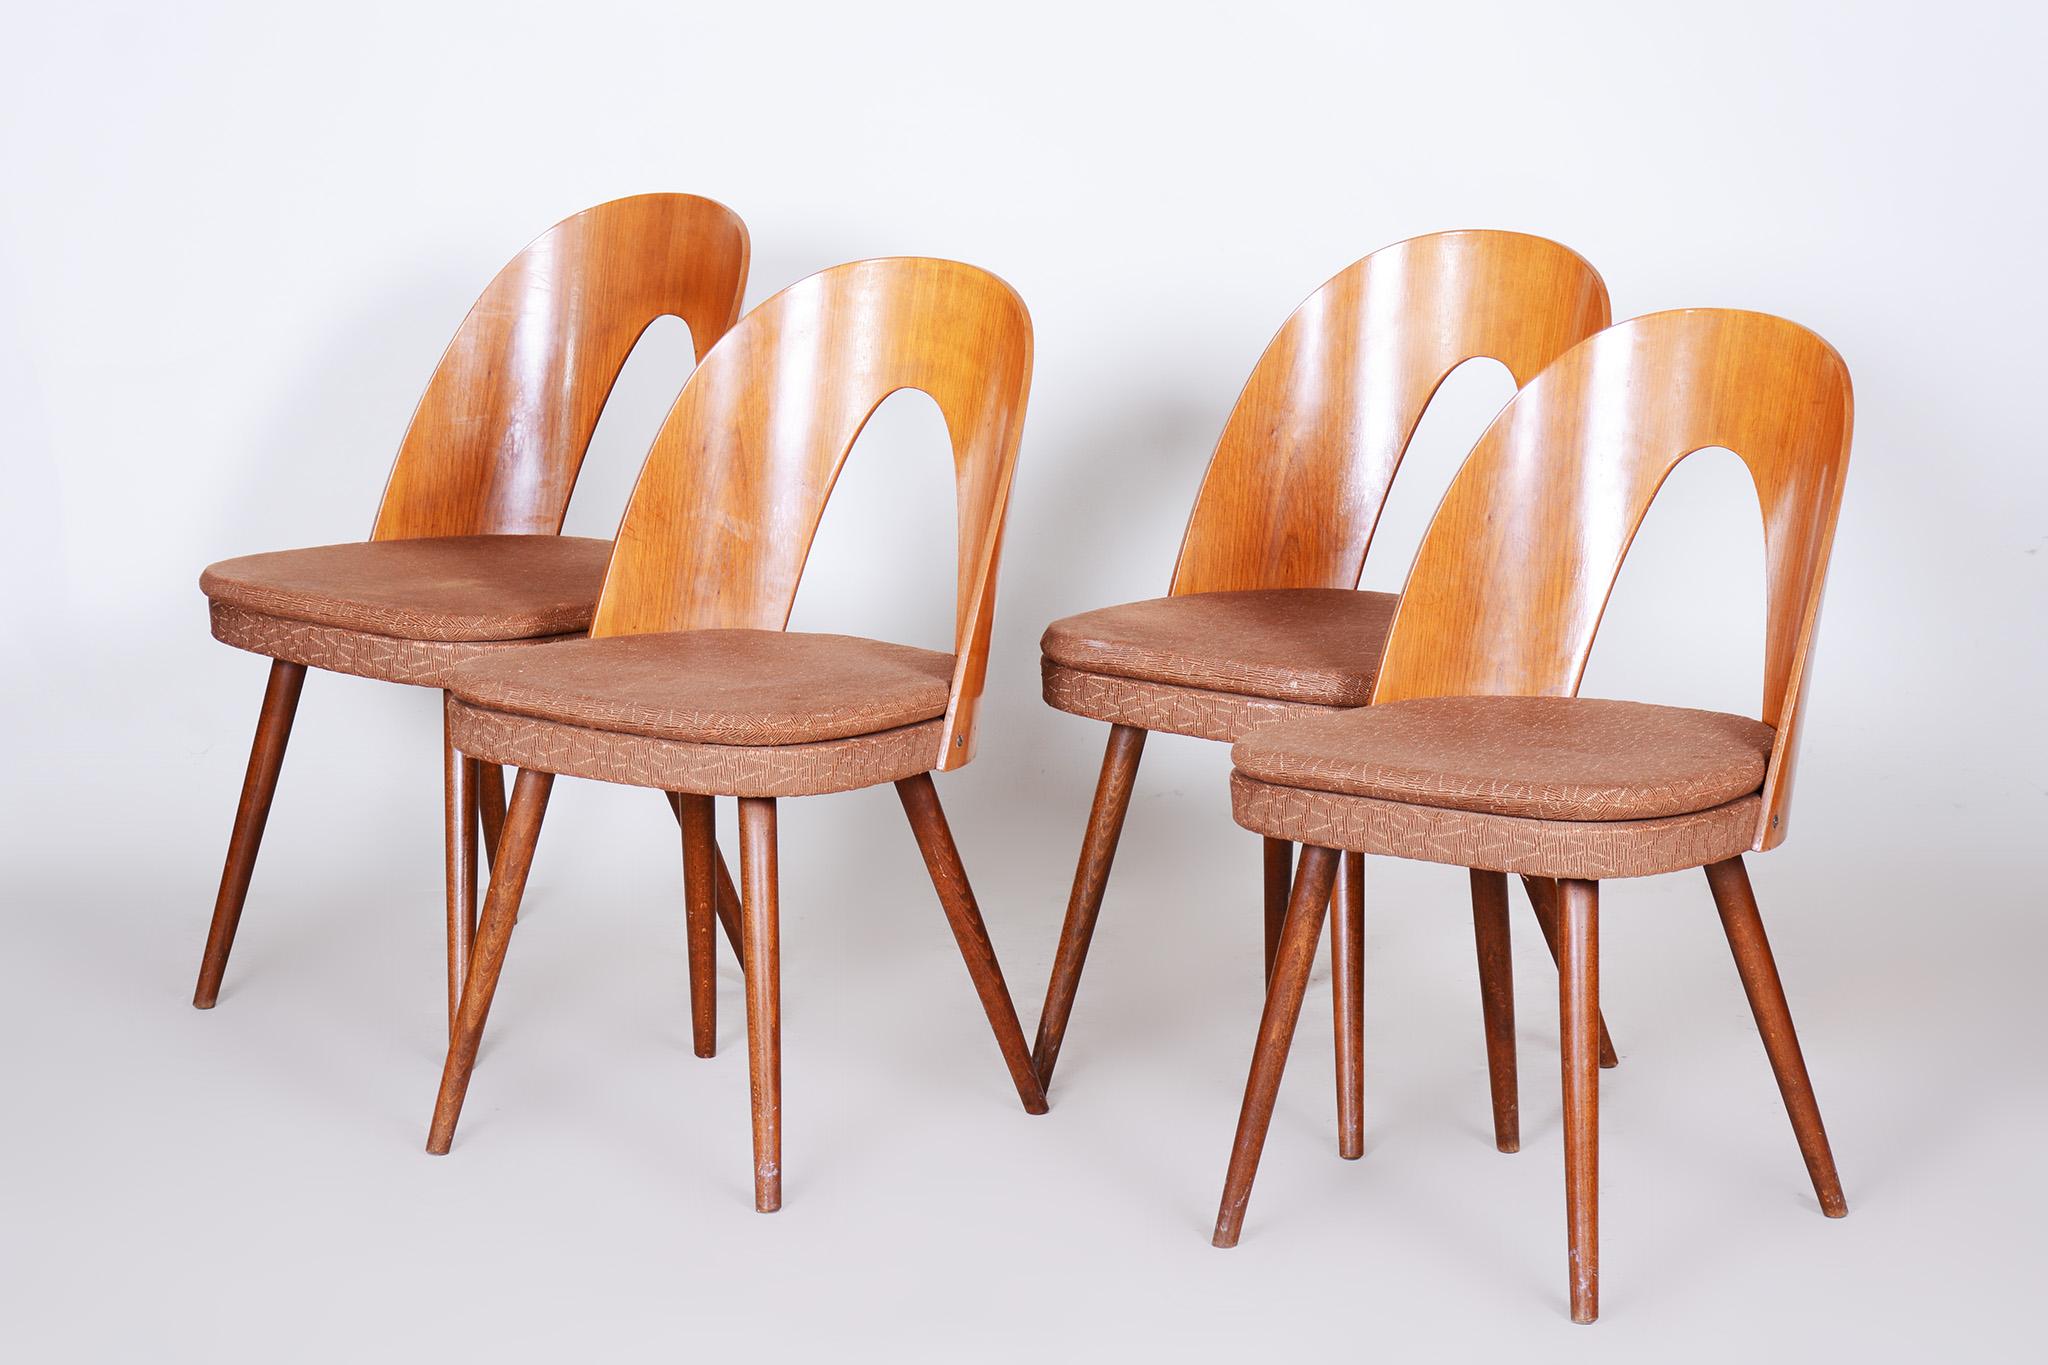 Set of Four Mid-Century Modern Chairs Made in 1950s Czechia by Antonín Šuman For Sale 1